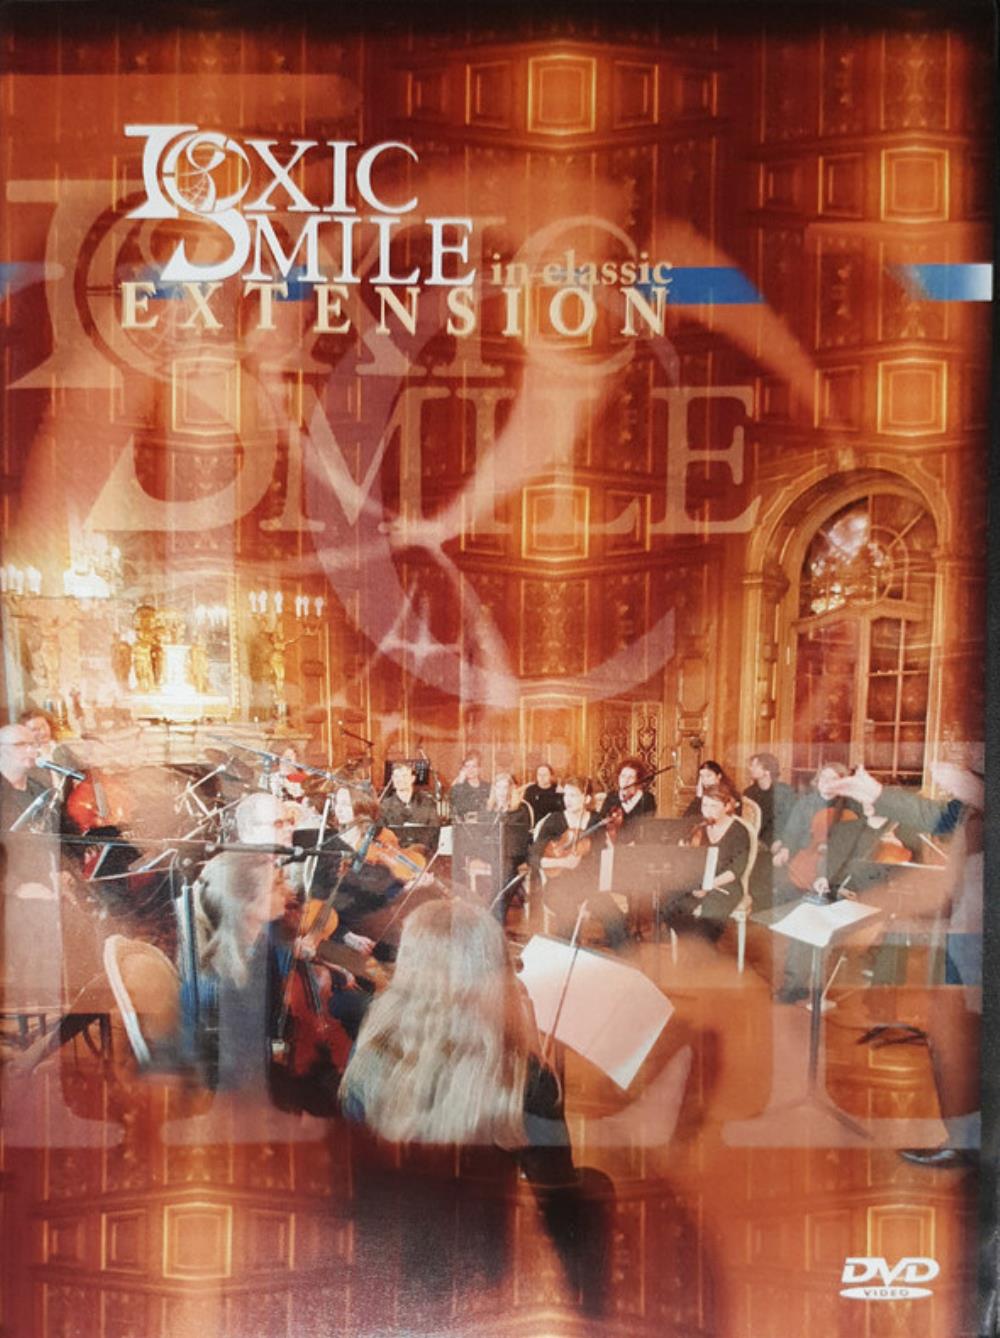 Toxic Smile In Classic Extension album cover